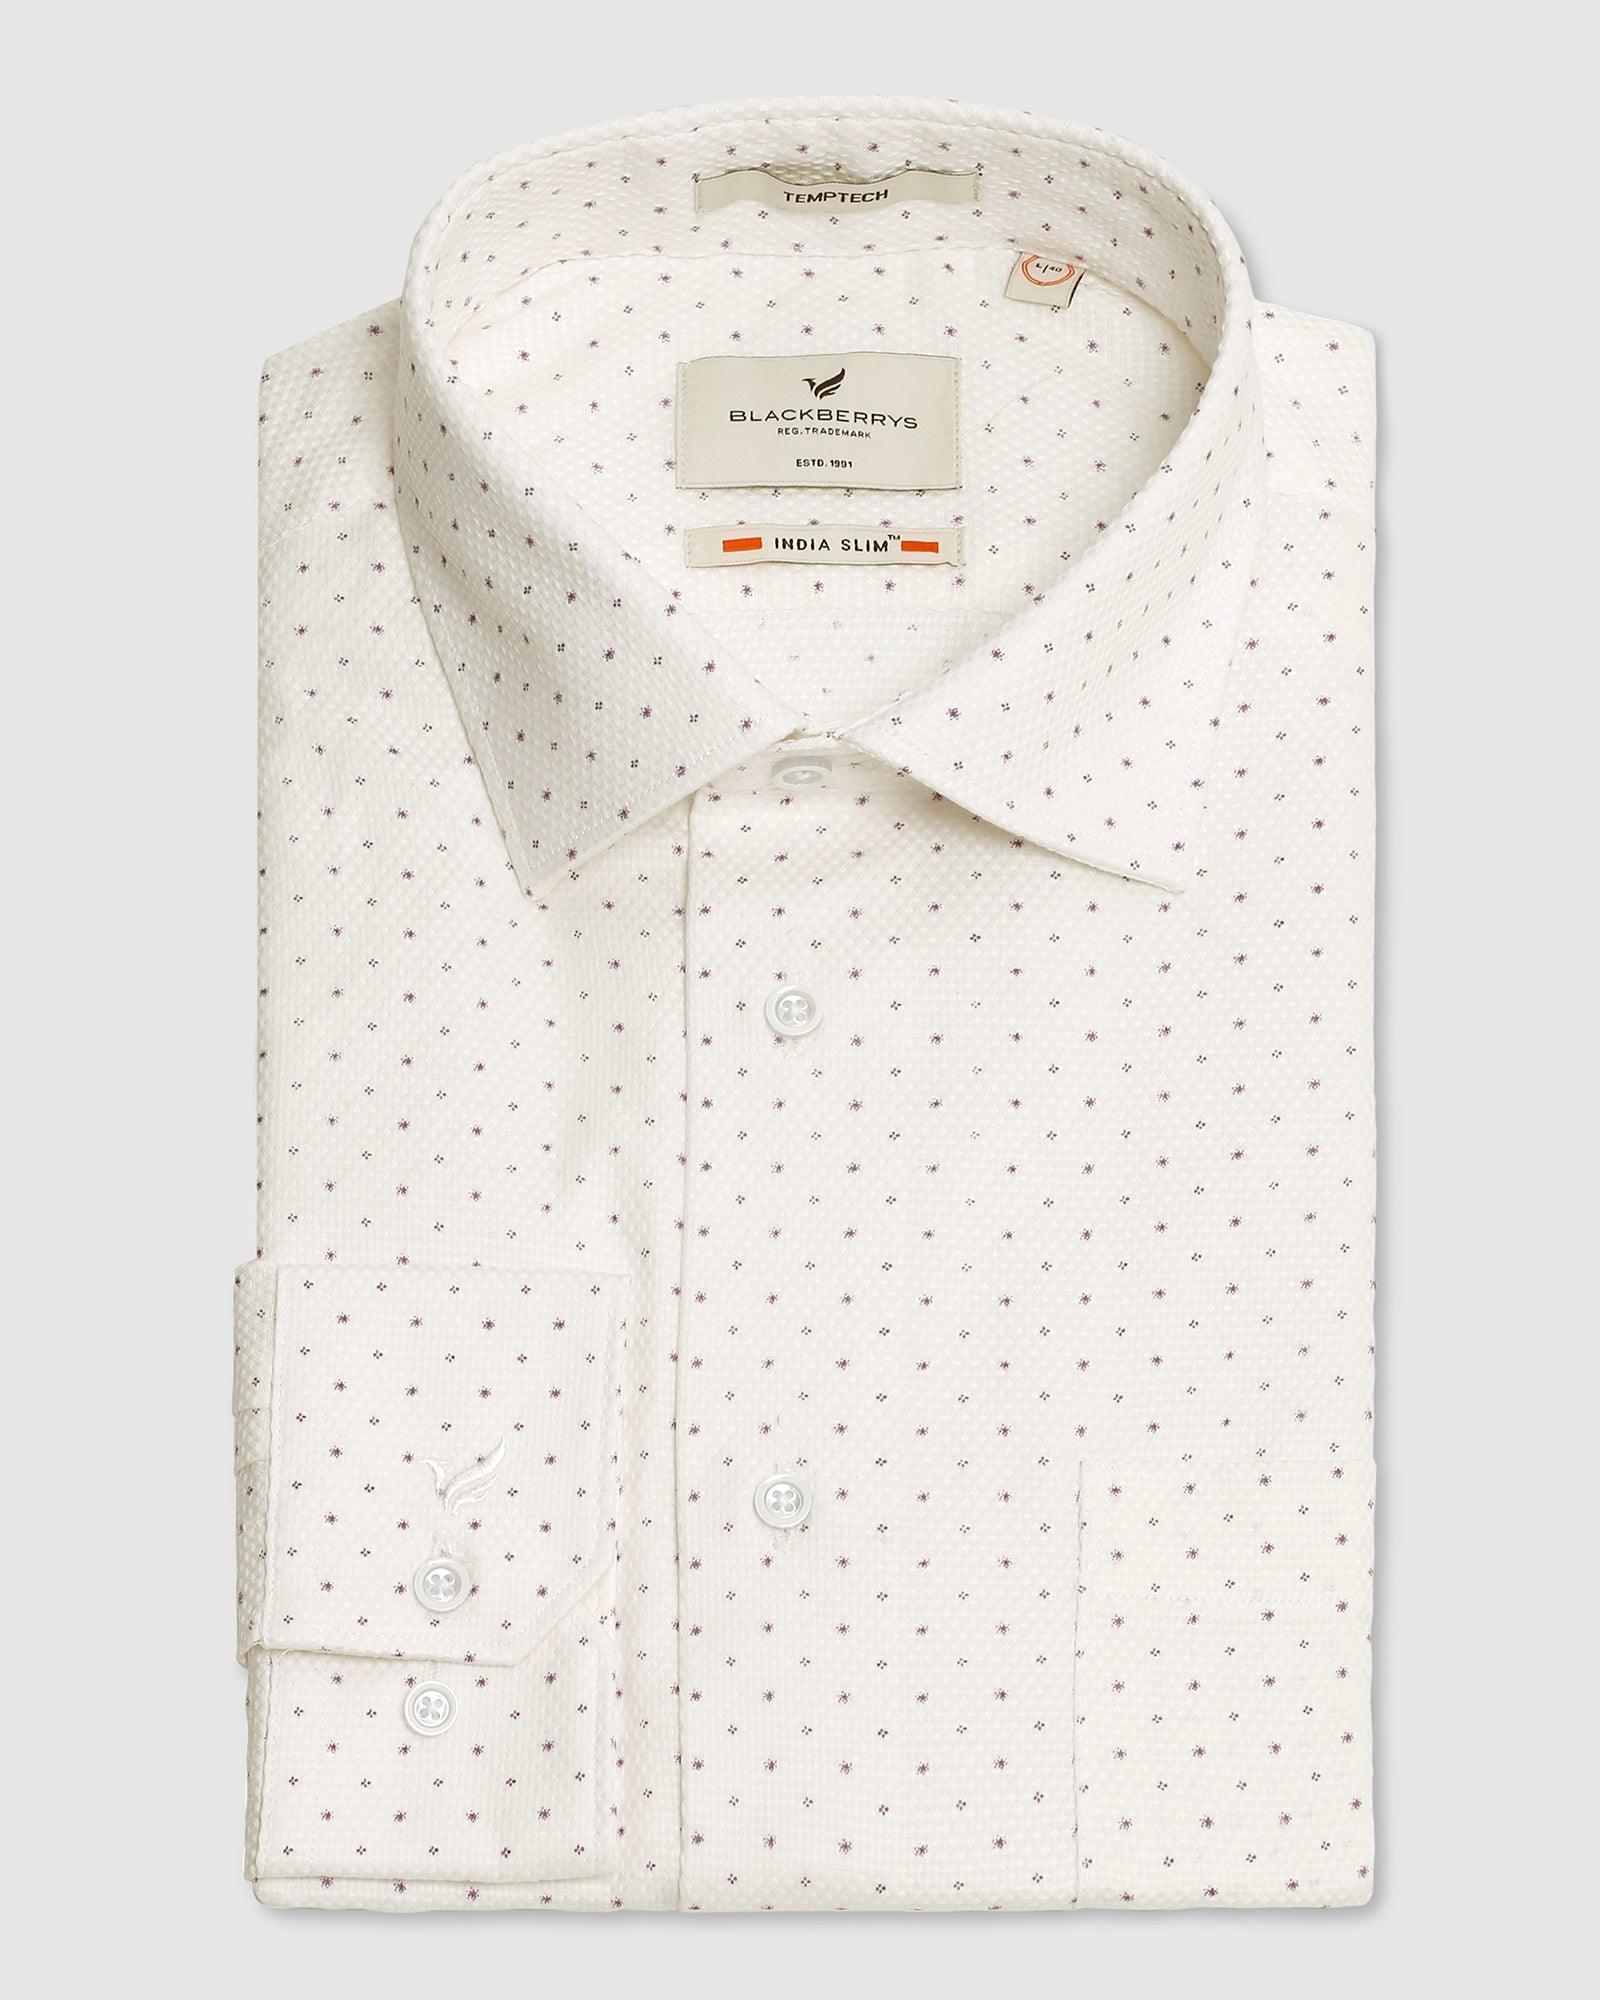 Formal Mauve Textured Shirt - Larry